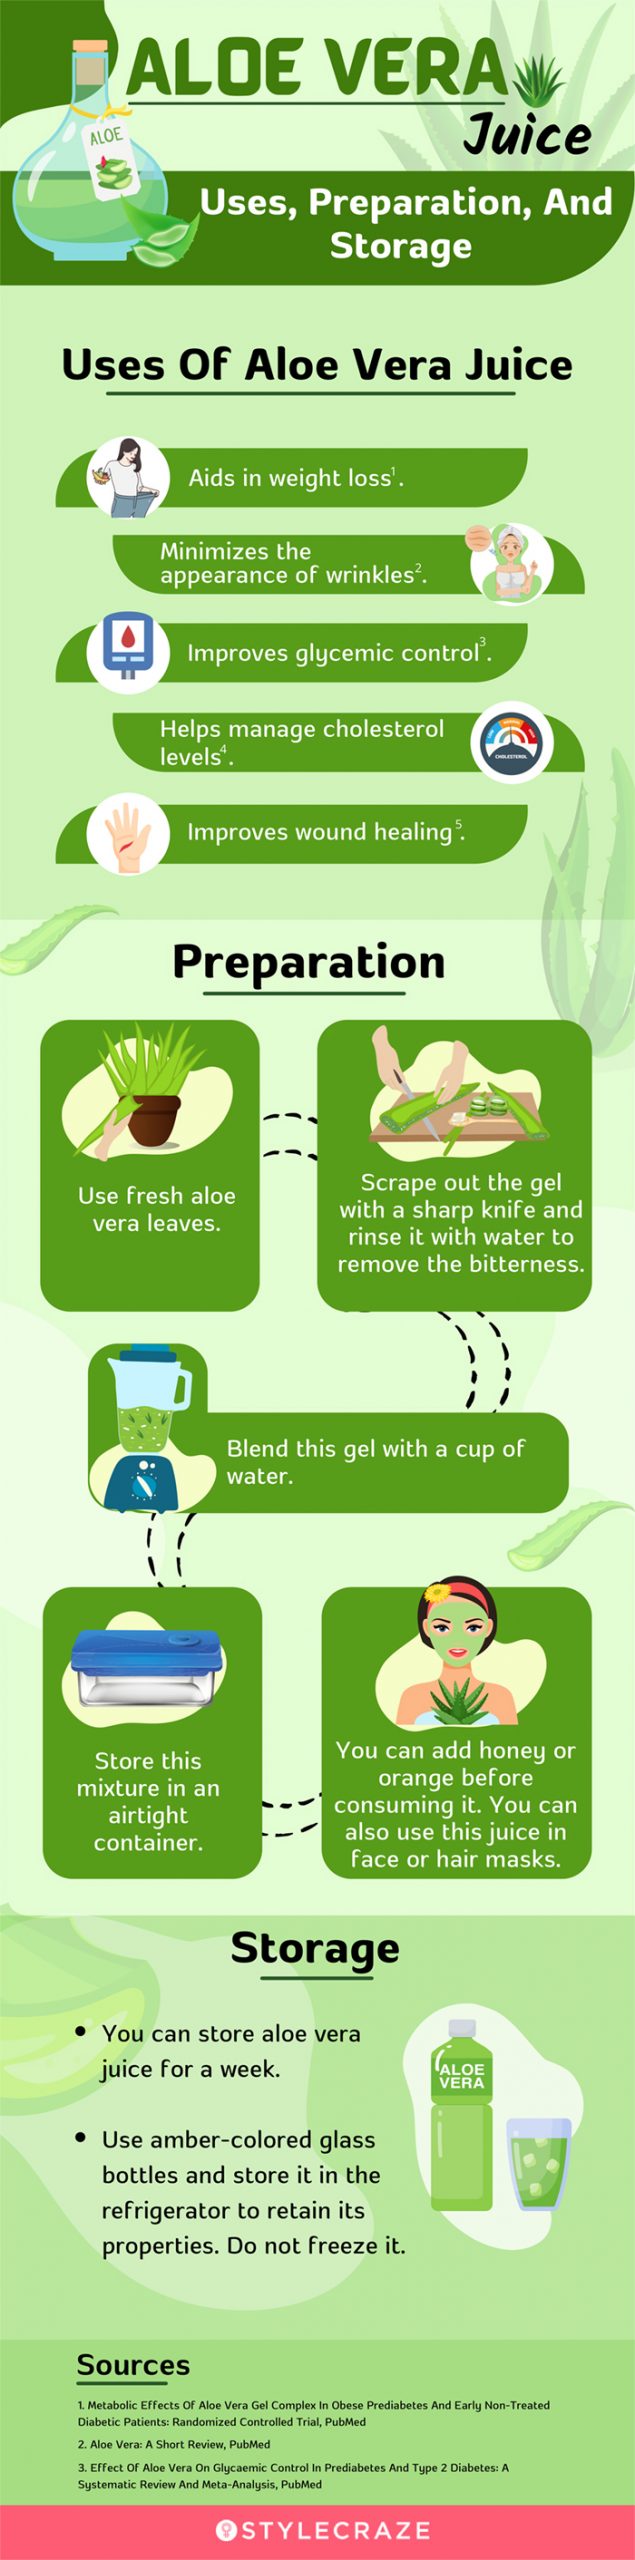 aloe vera juice uses preparation and storage [infographic]